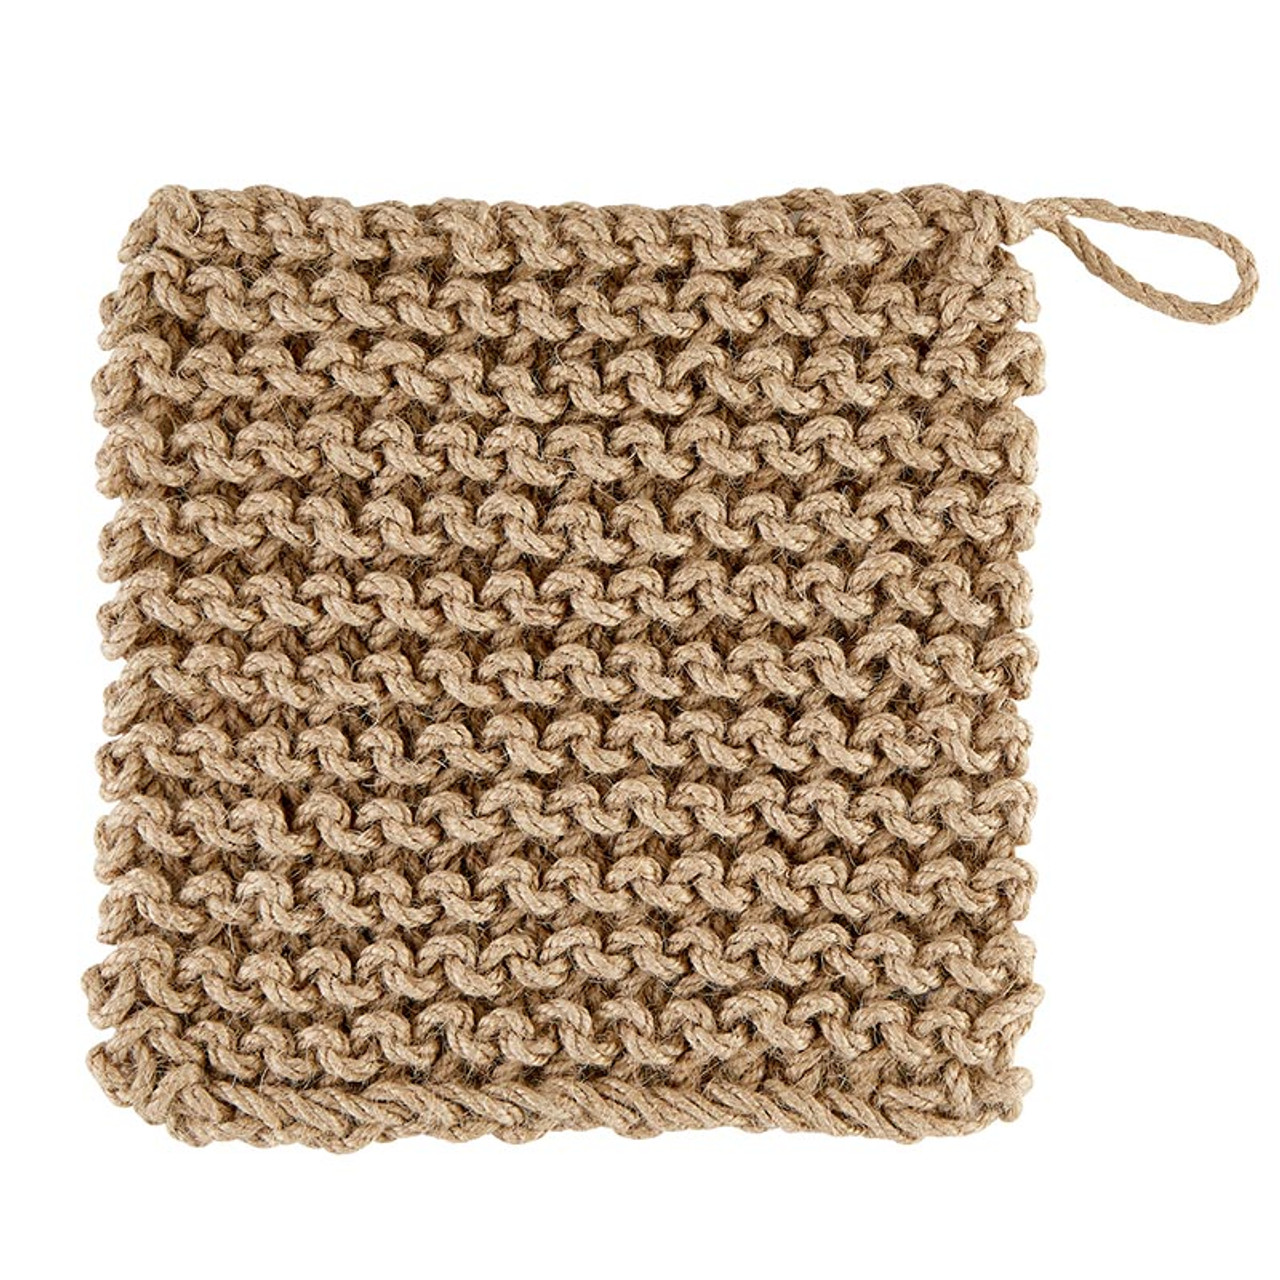 Creative Co-op Cotton Knit Dish Cloths in Cotton Bag